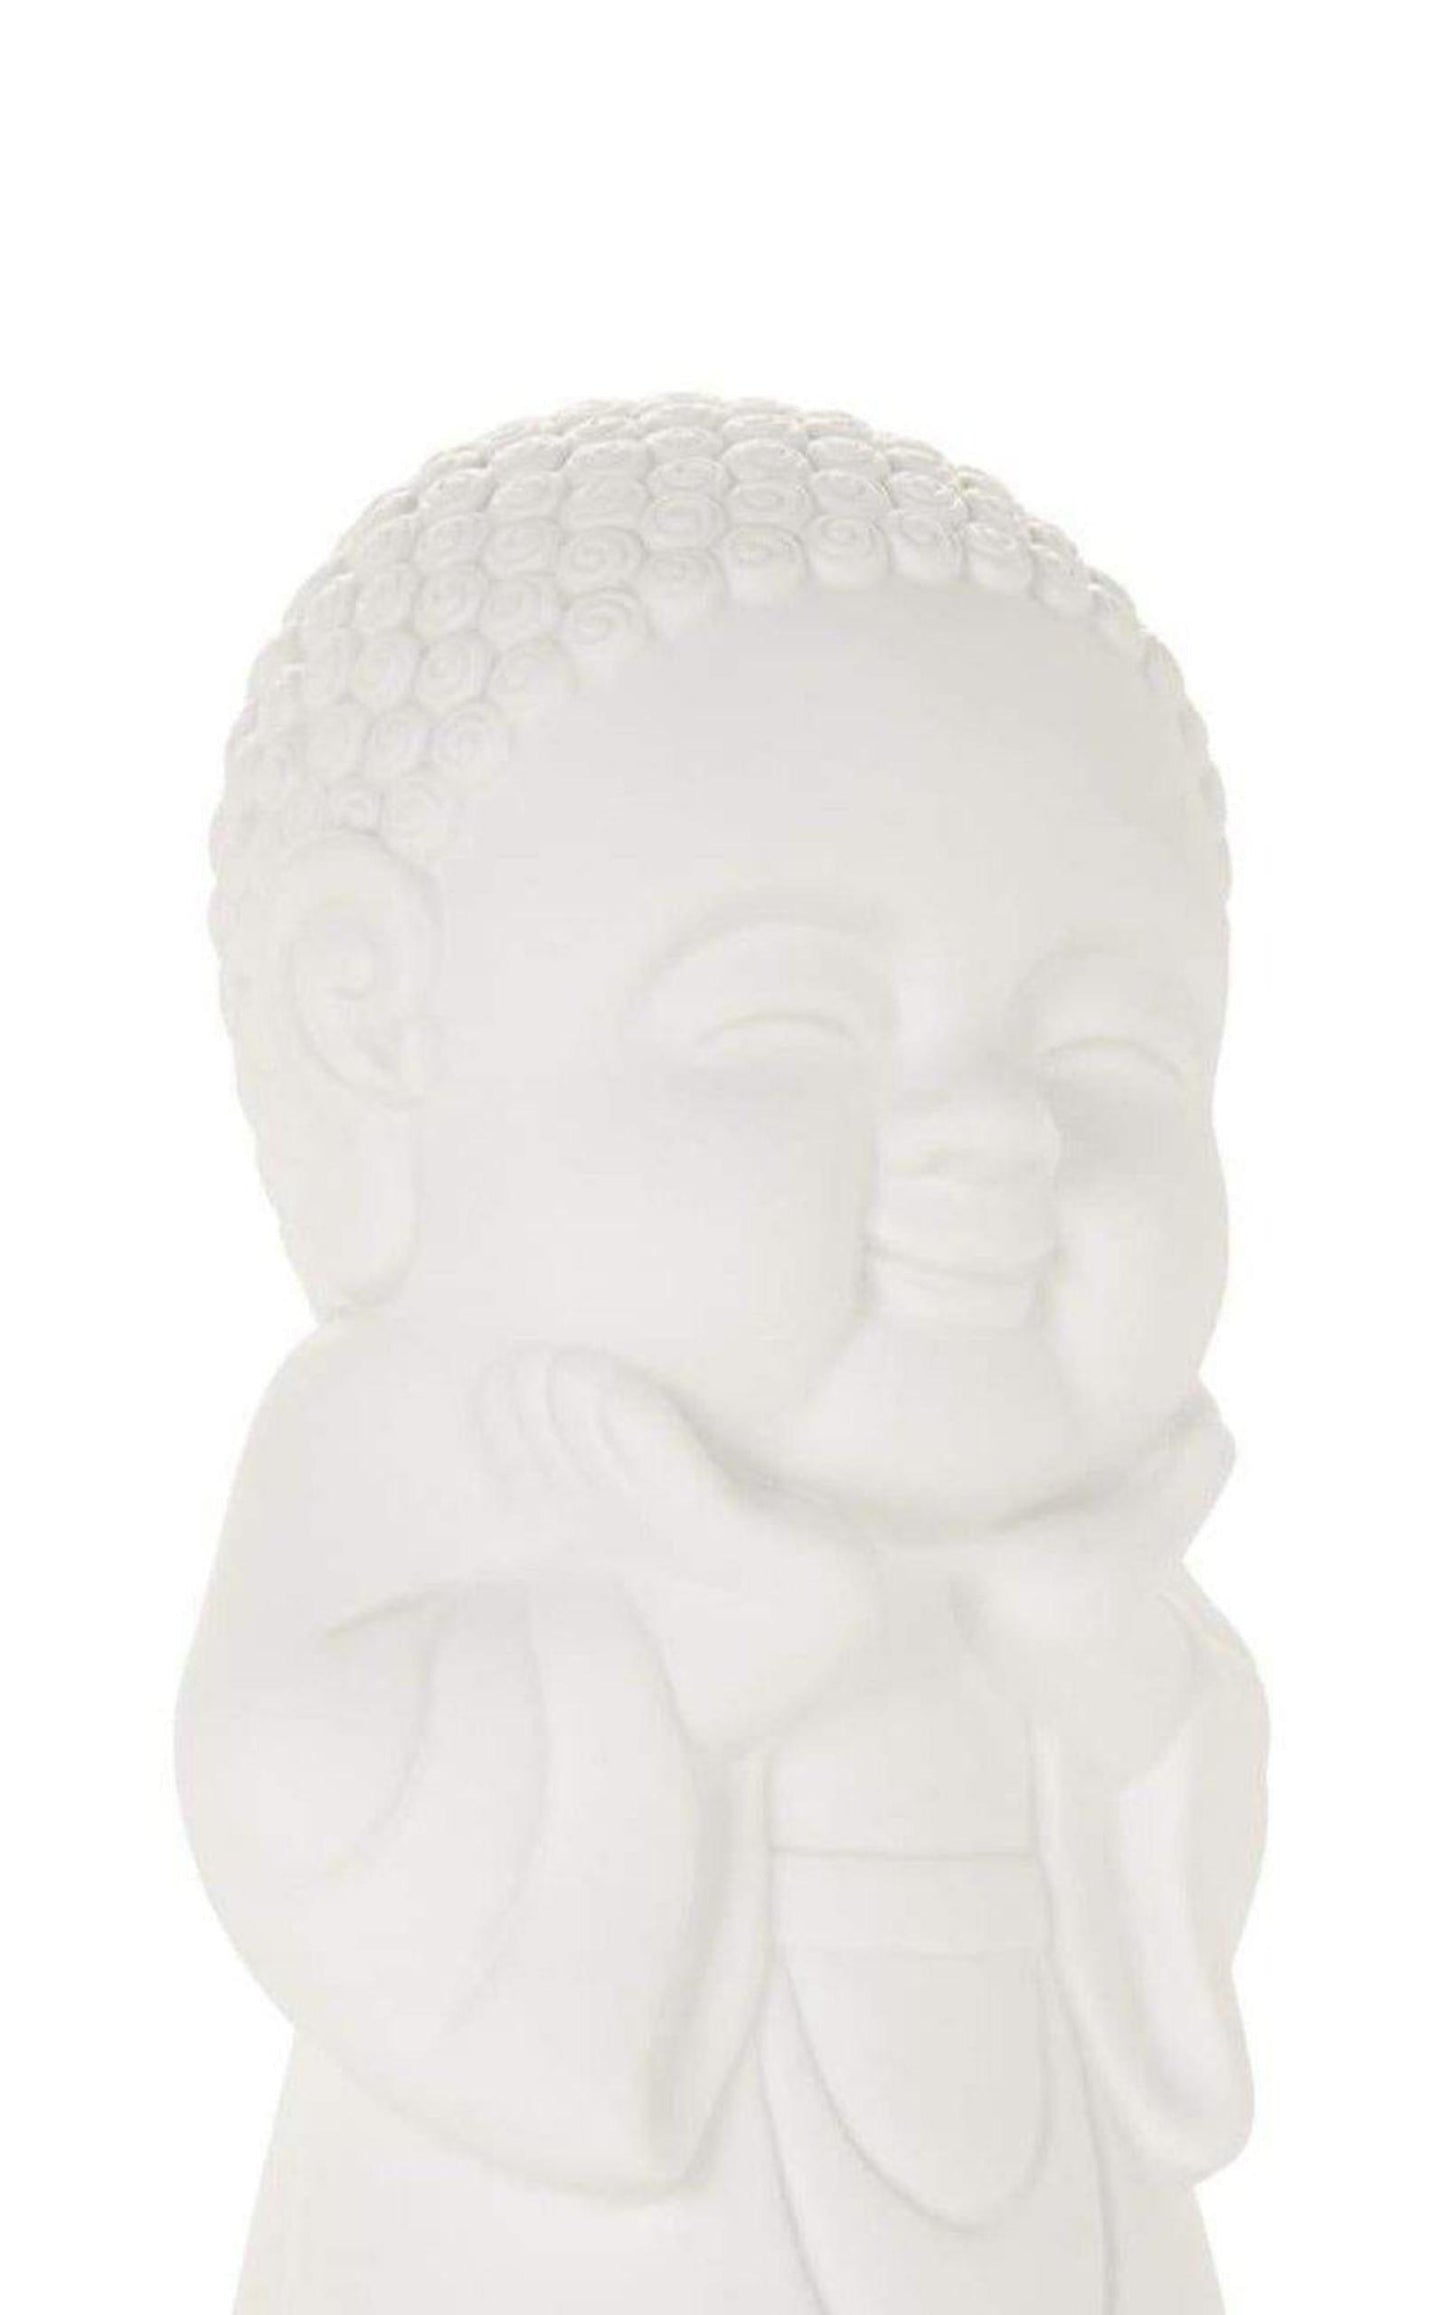  BCBGMAXAZRIAHappy Buddha Ceramic Light - Runway Catalog